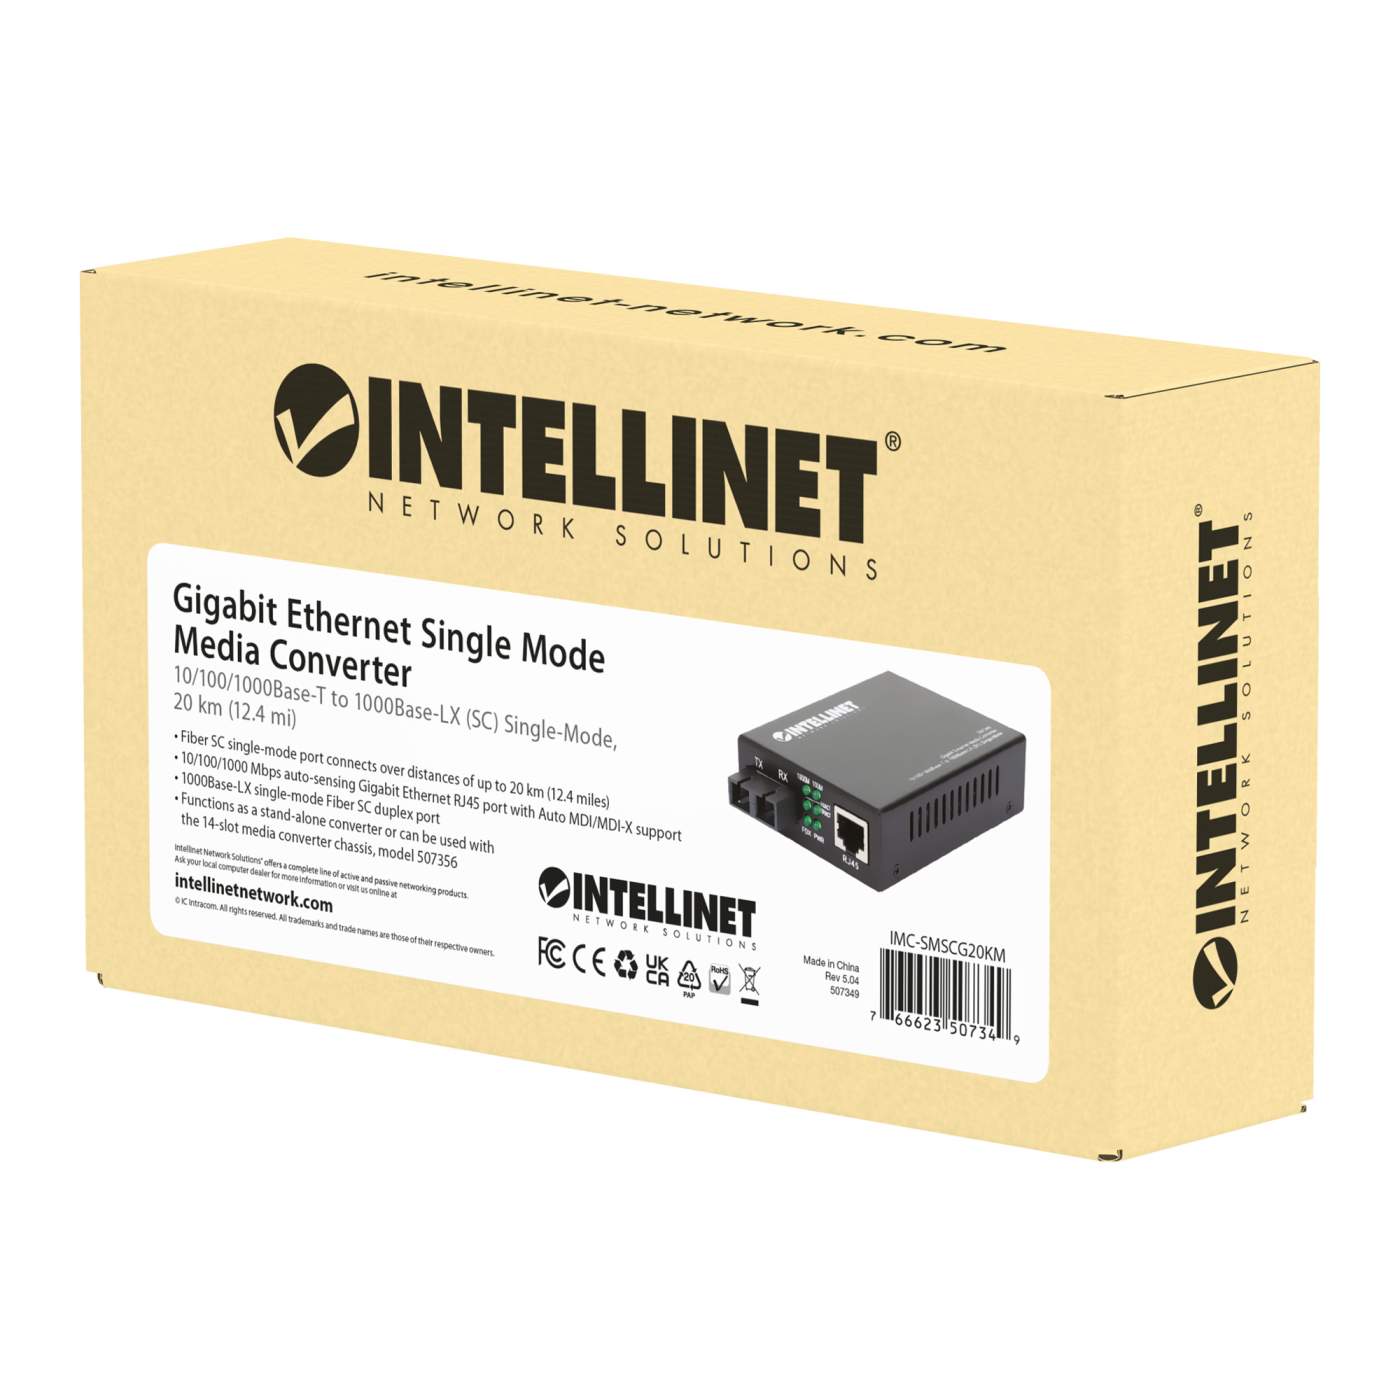 Gigabit Ethernet Single-Mode Media Converter Packaging Image 2